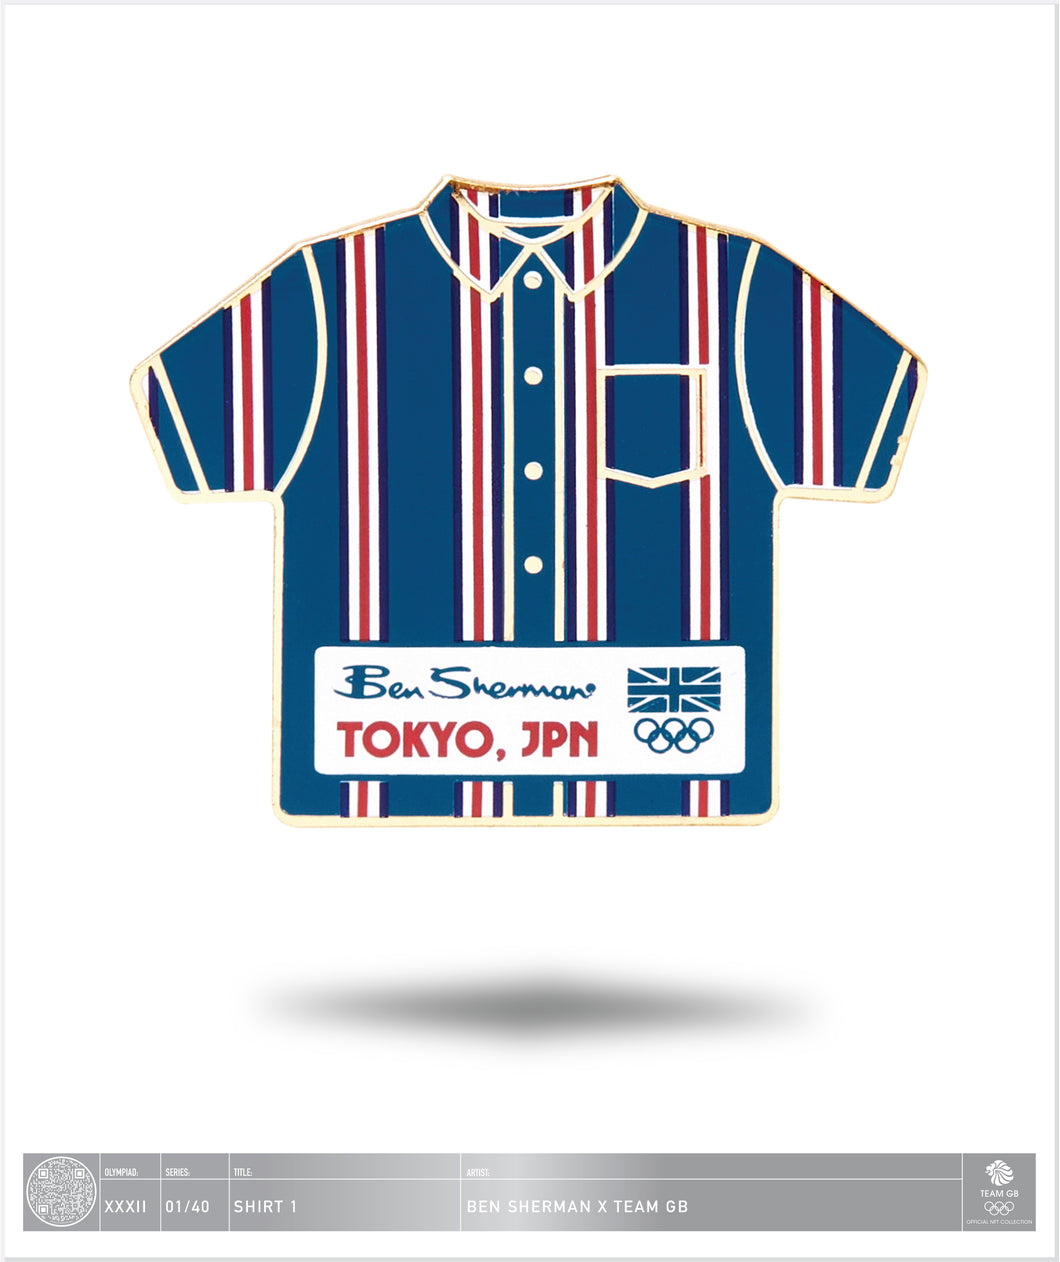 Ben Sherman Tokyo - Shirt 1 - 1 / 40